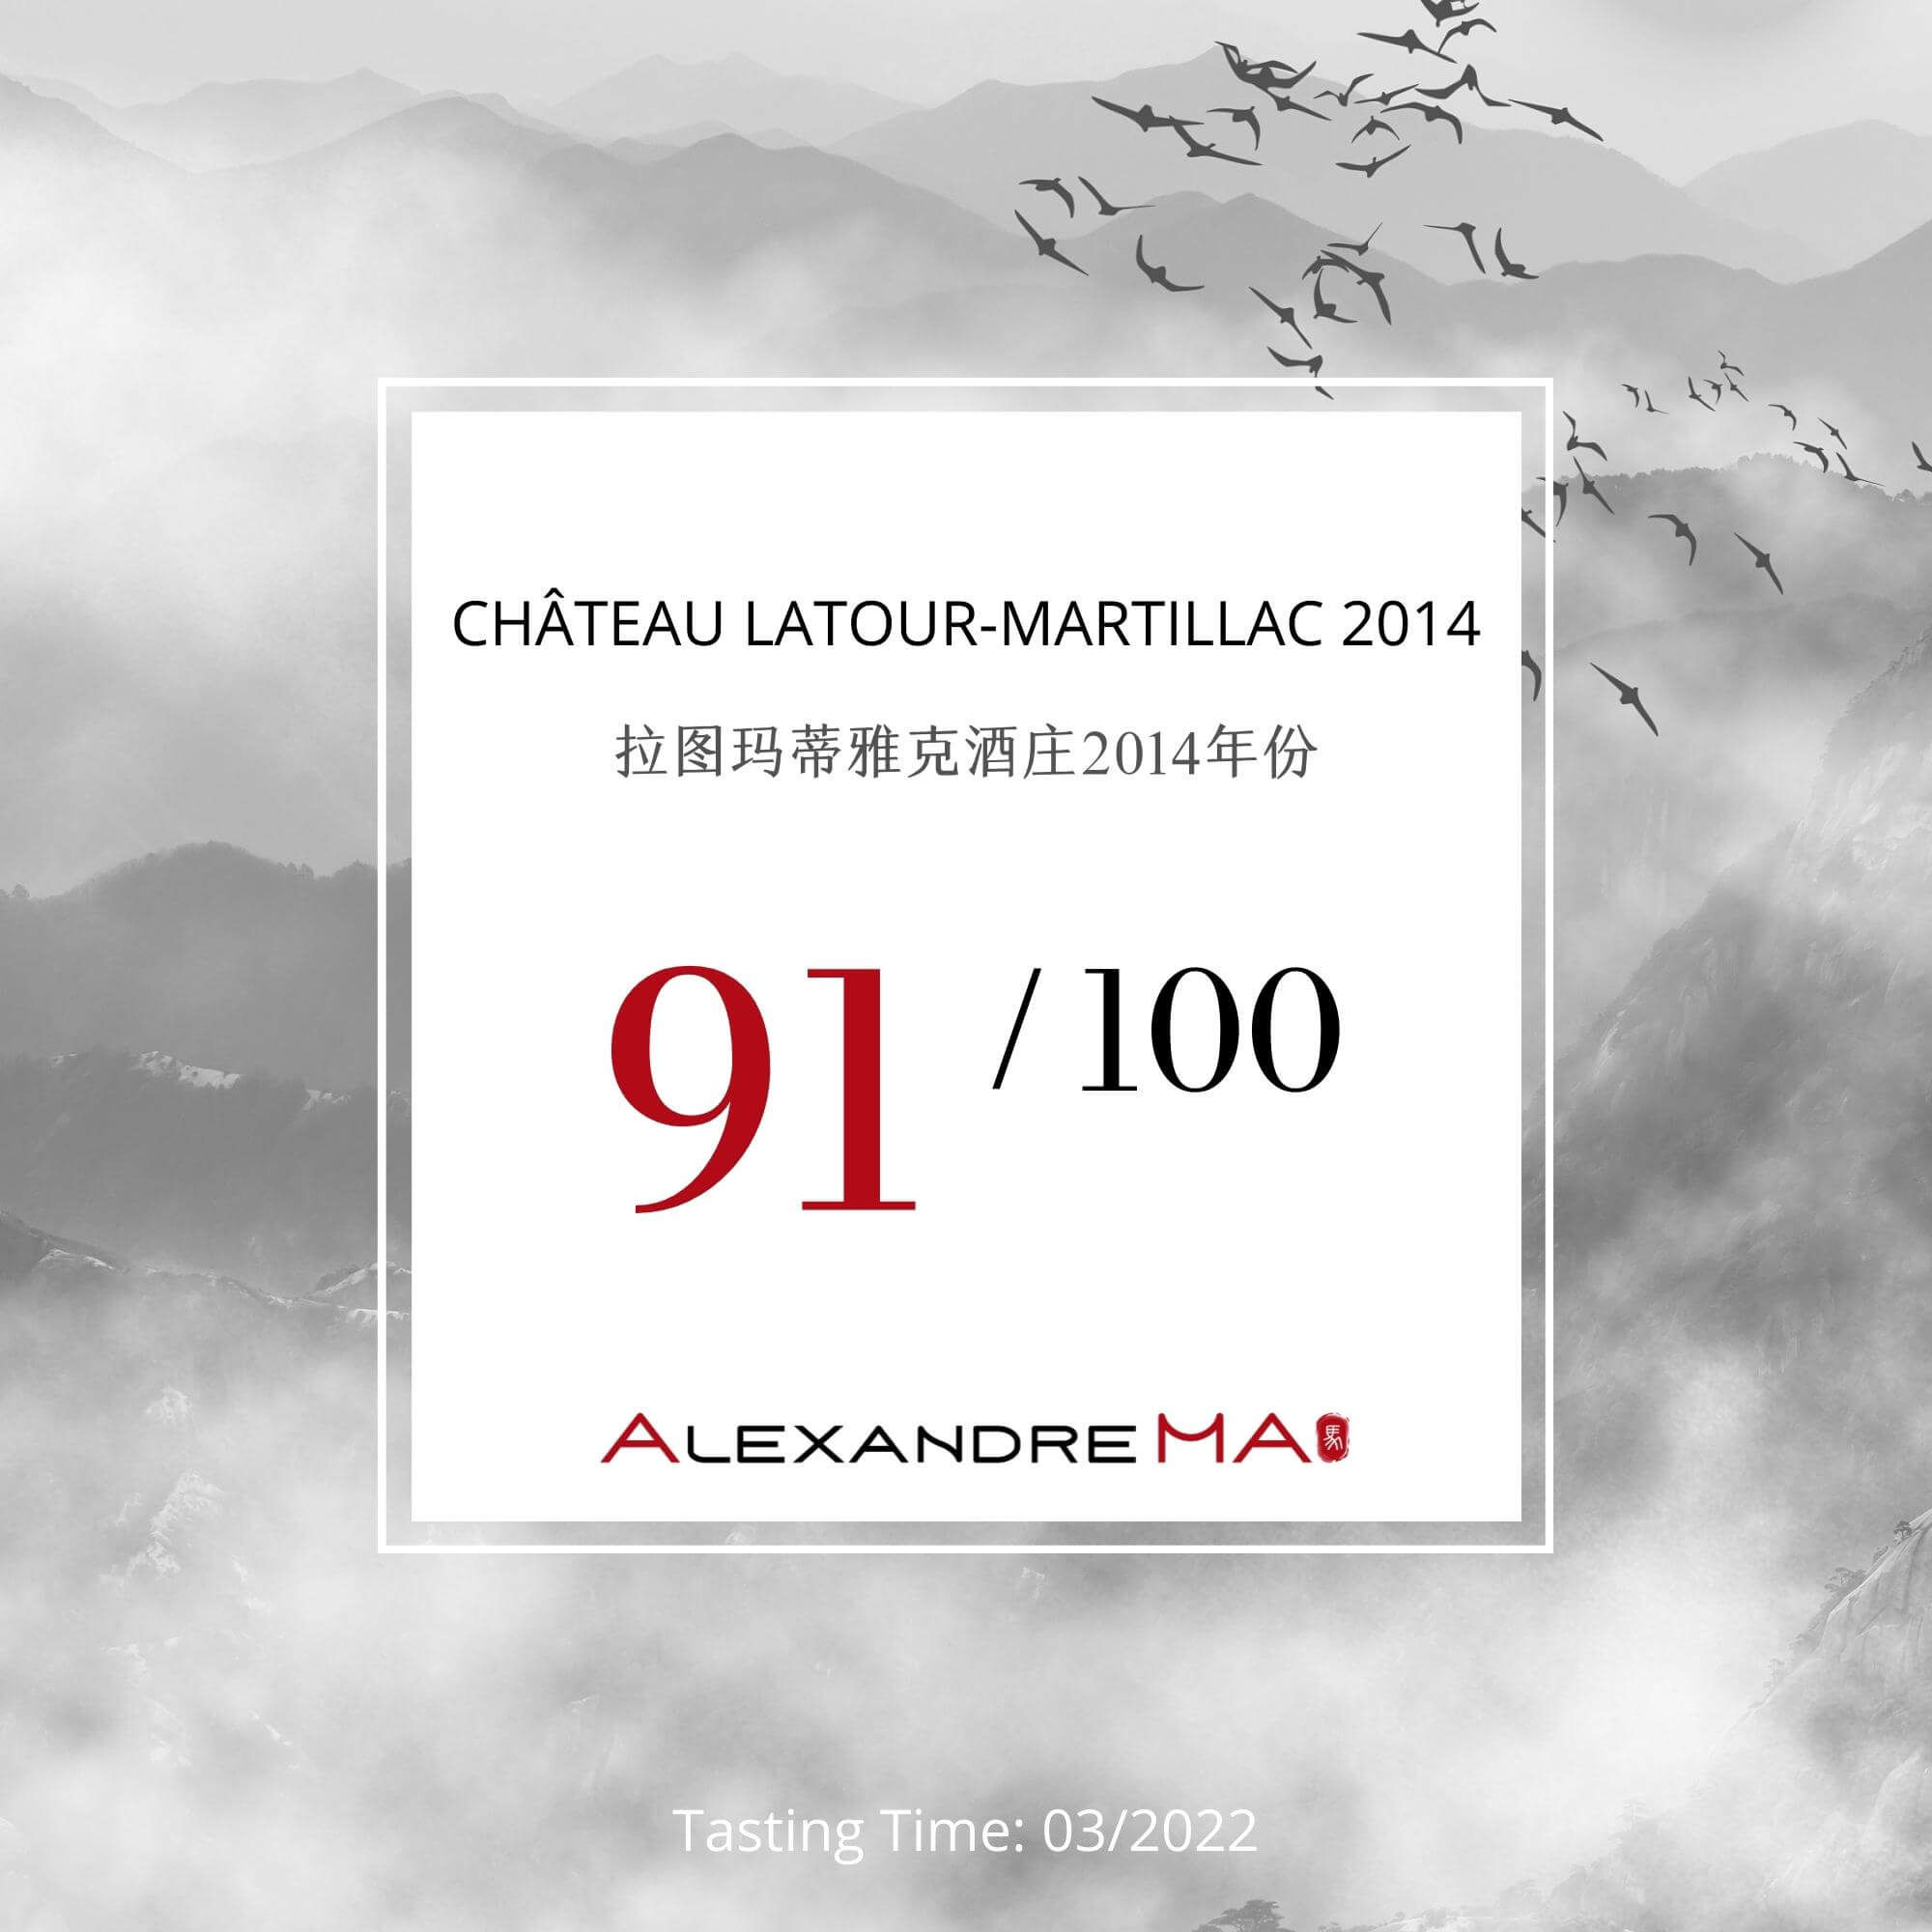 Château Latour-Martillac 拉图玛蒂雅克酒庄 2014 - Alexandre Ma